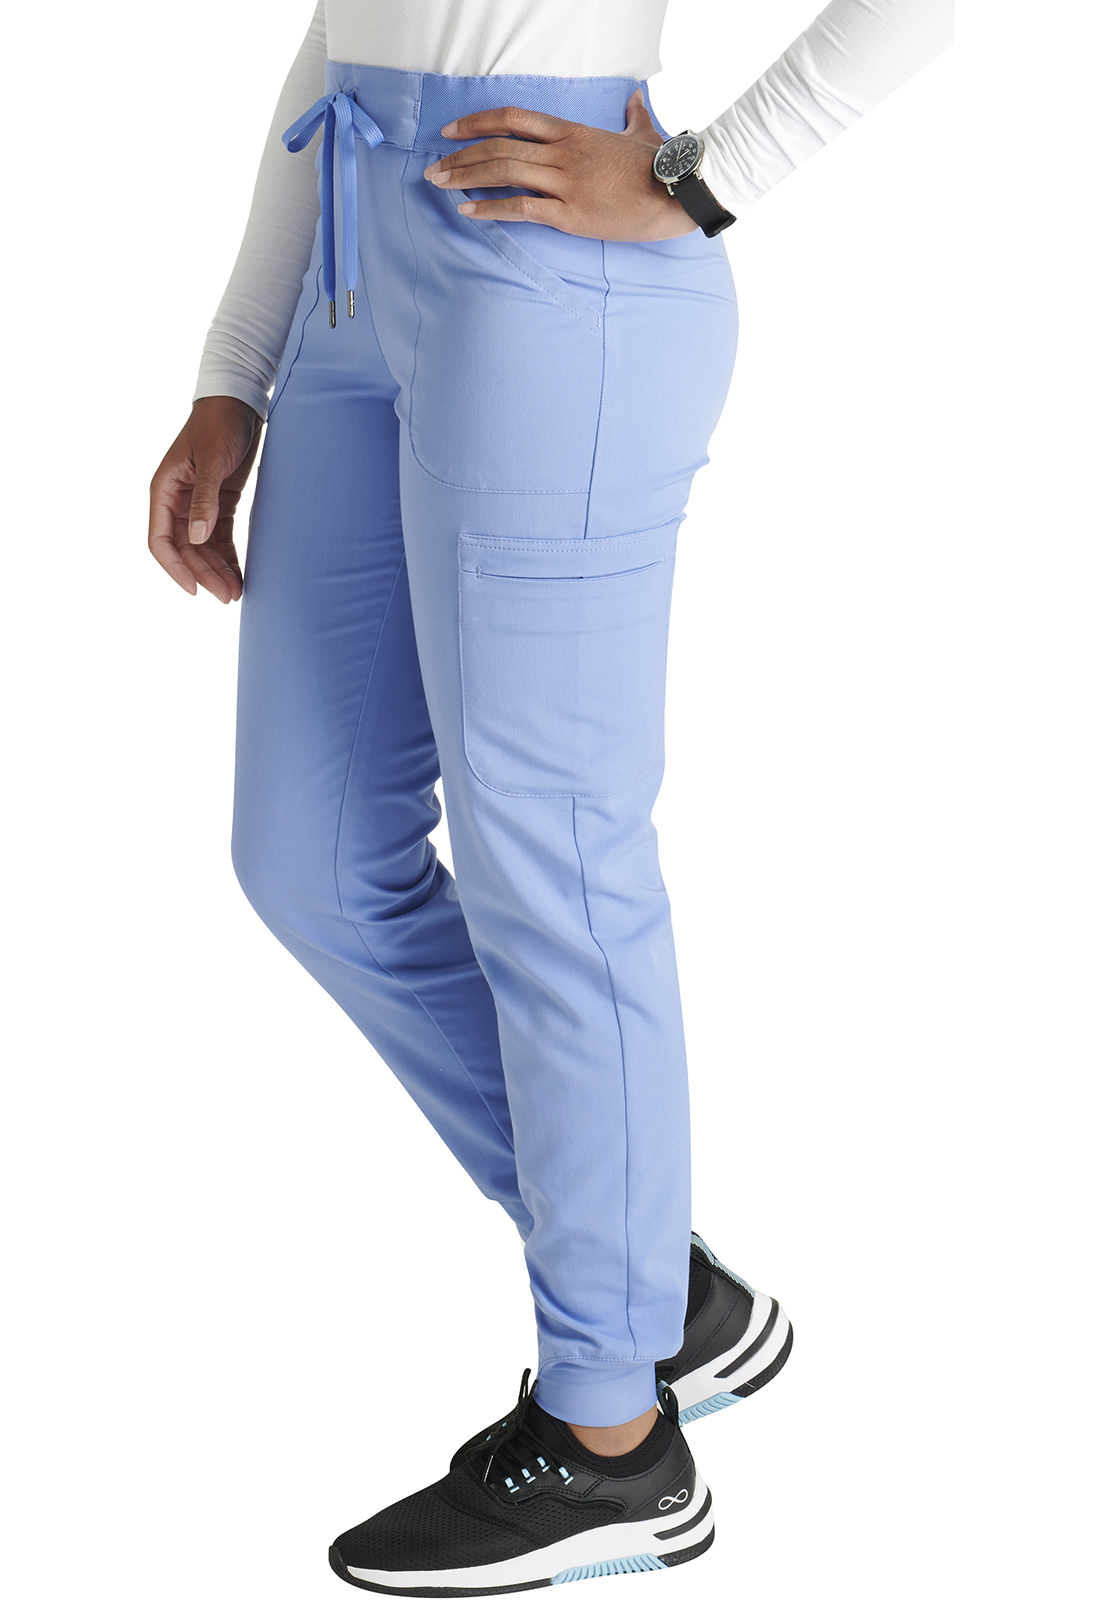 Cherokee Women's Pajama Set, Long Sleeve Cotton Top & Micro Fleece Pants,  Soft & Cozy Loungewear, Water Color Floral/Blue, Medium price in UAE,  UAE